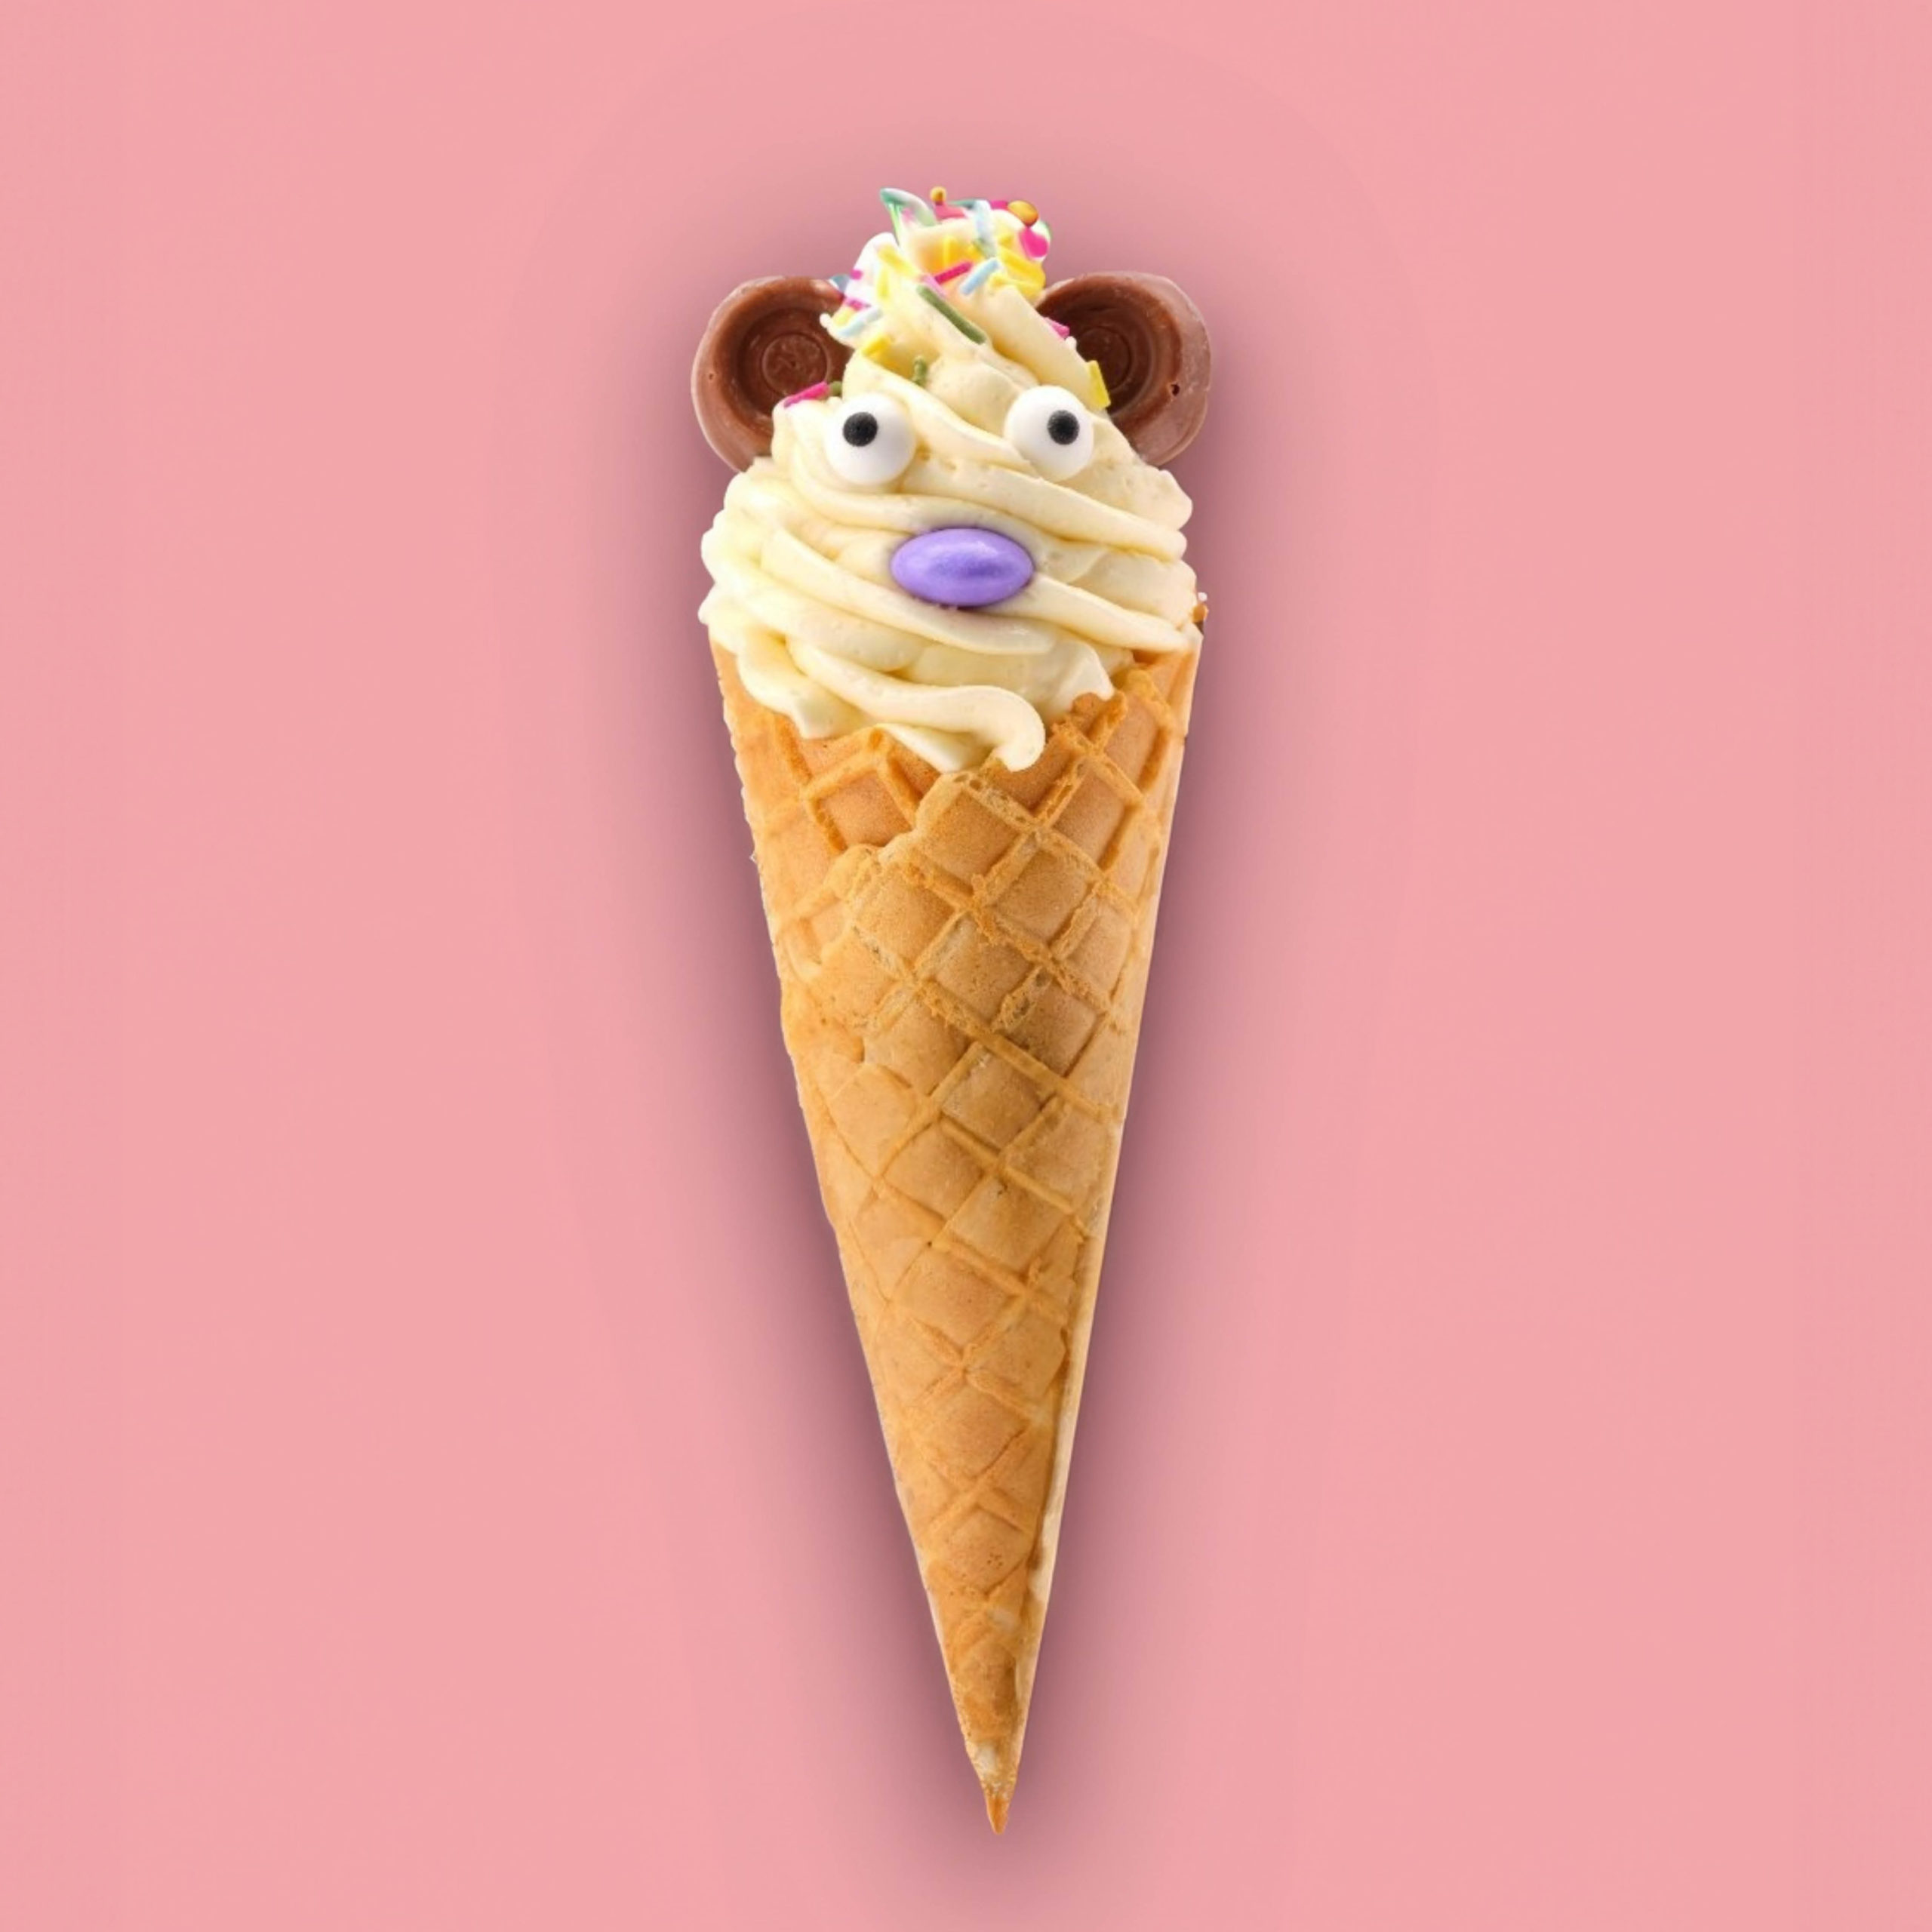 Kids menu Sweetie the soft bear ice cream cone